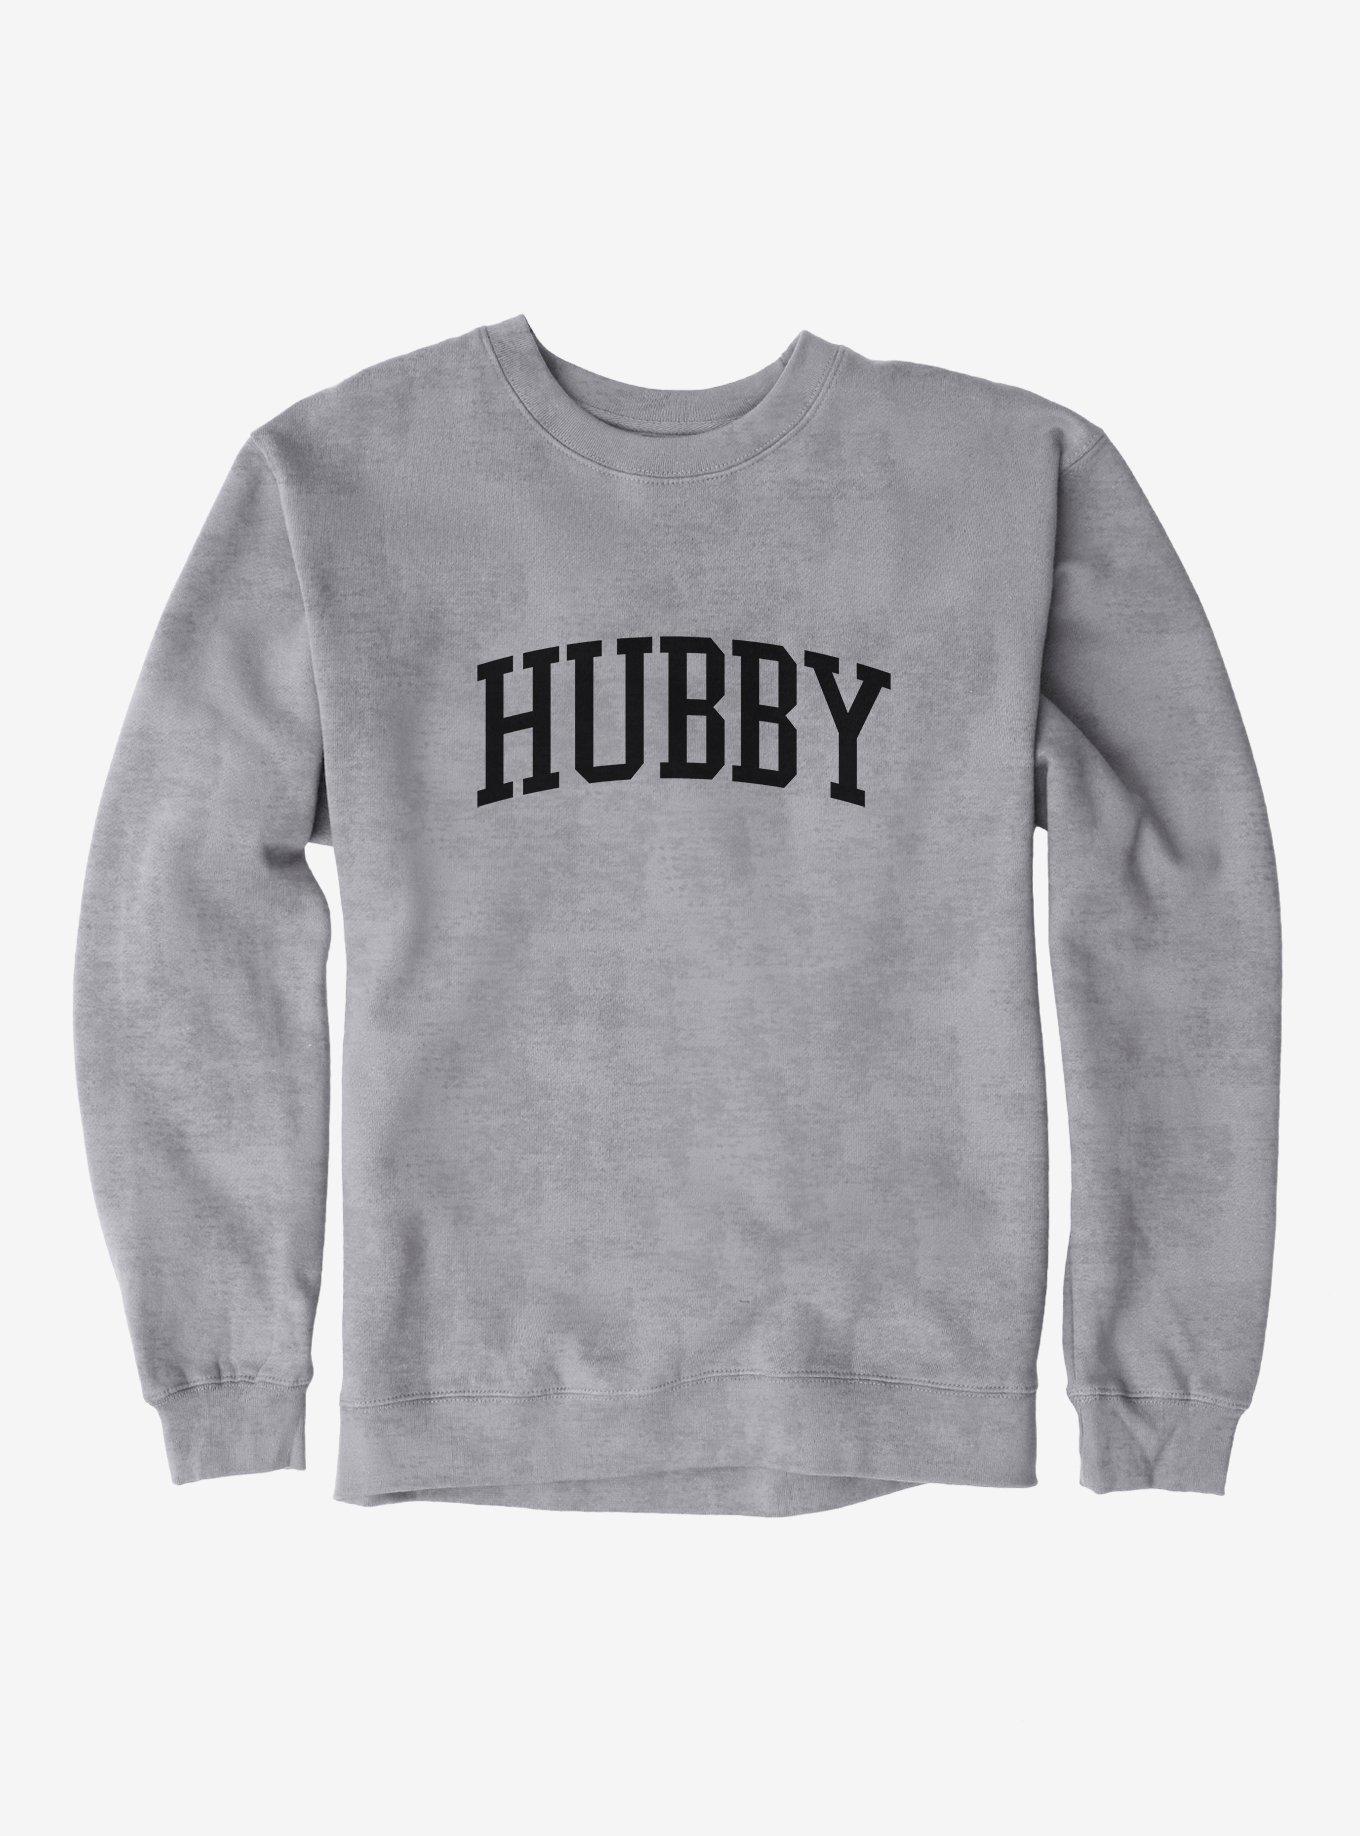 Hot Topic Collegiate Hubby Sweatshirt